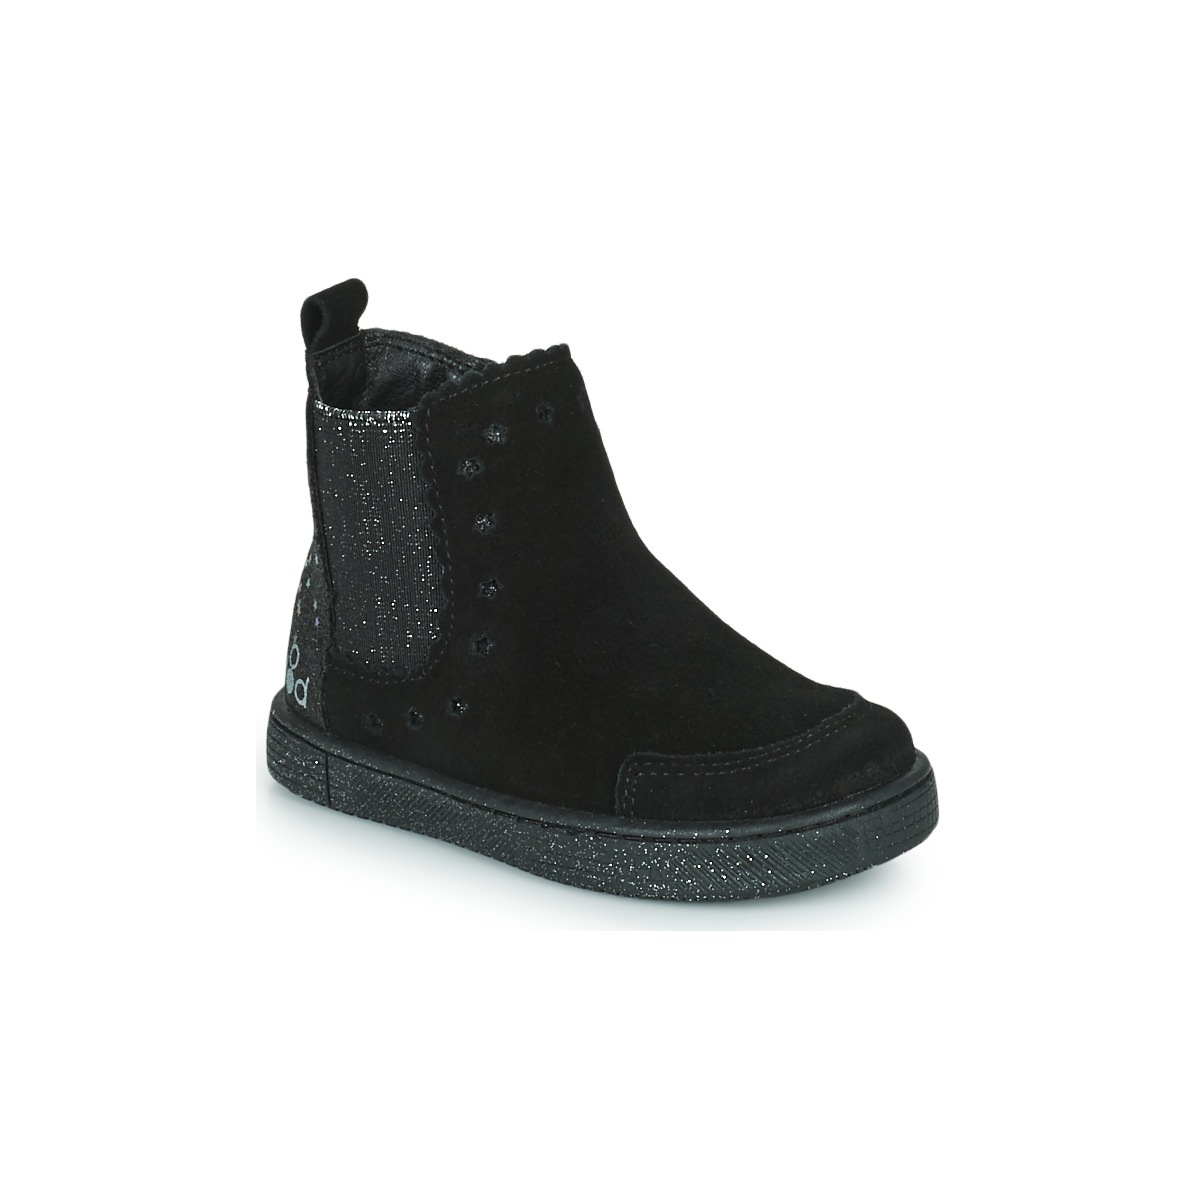 Schuhe Mädchen Boots Mod'8 BLANOU Schwarz / Glitterfarbe